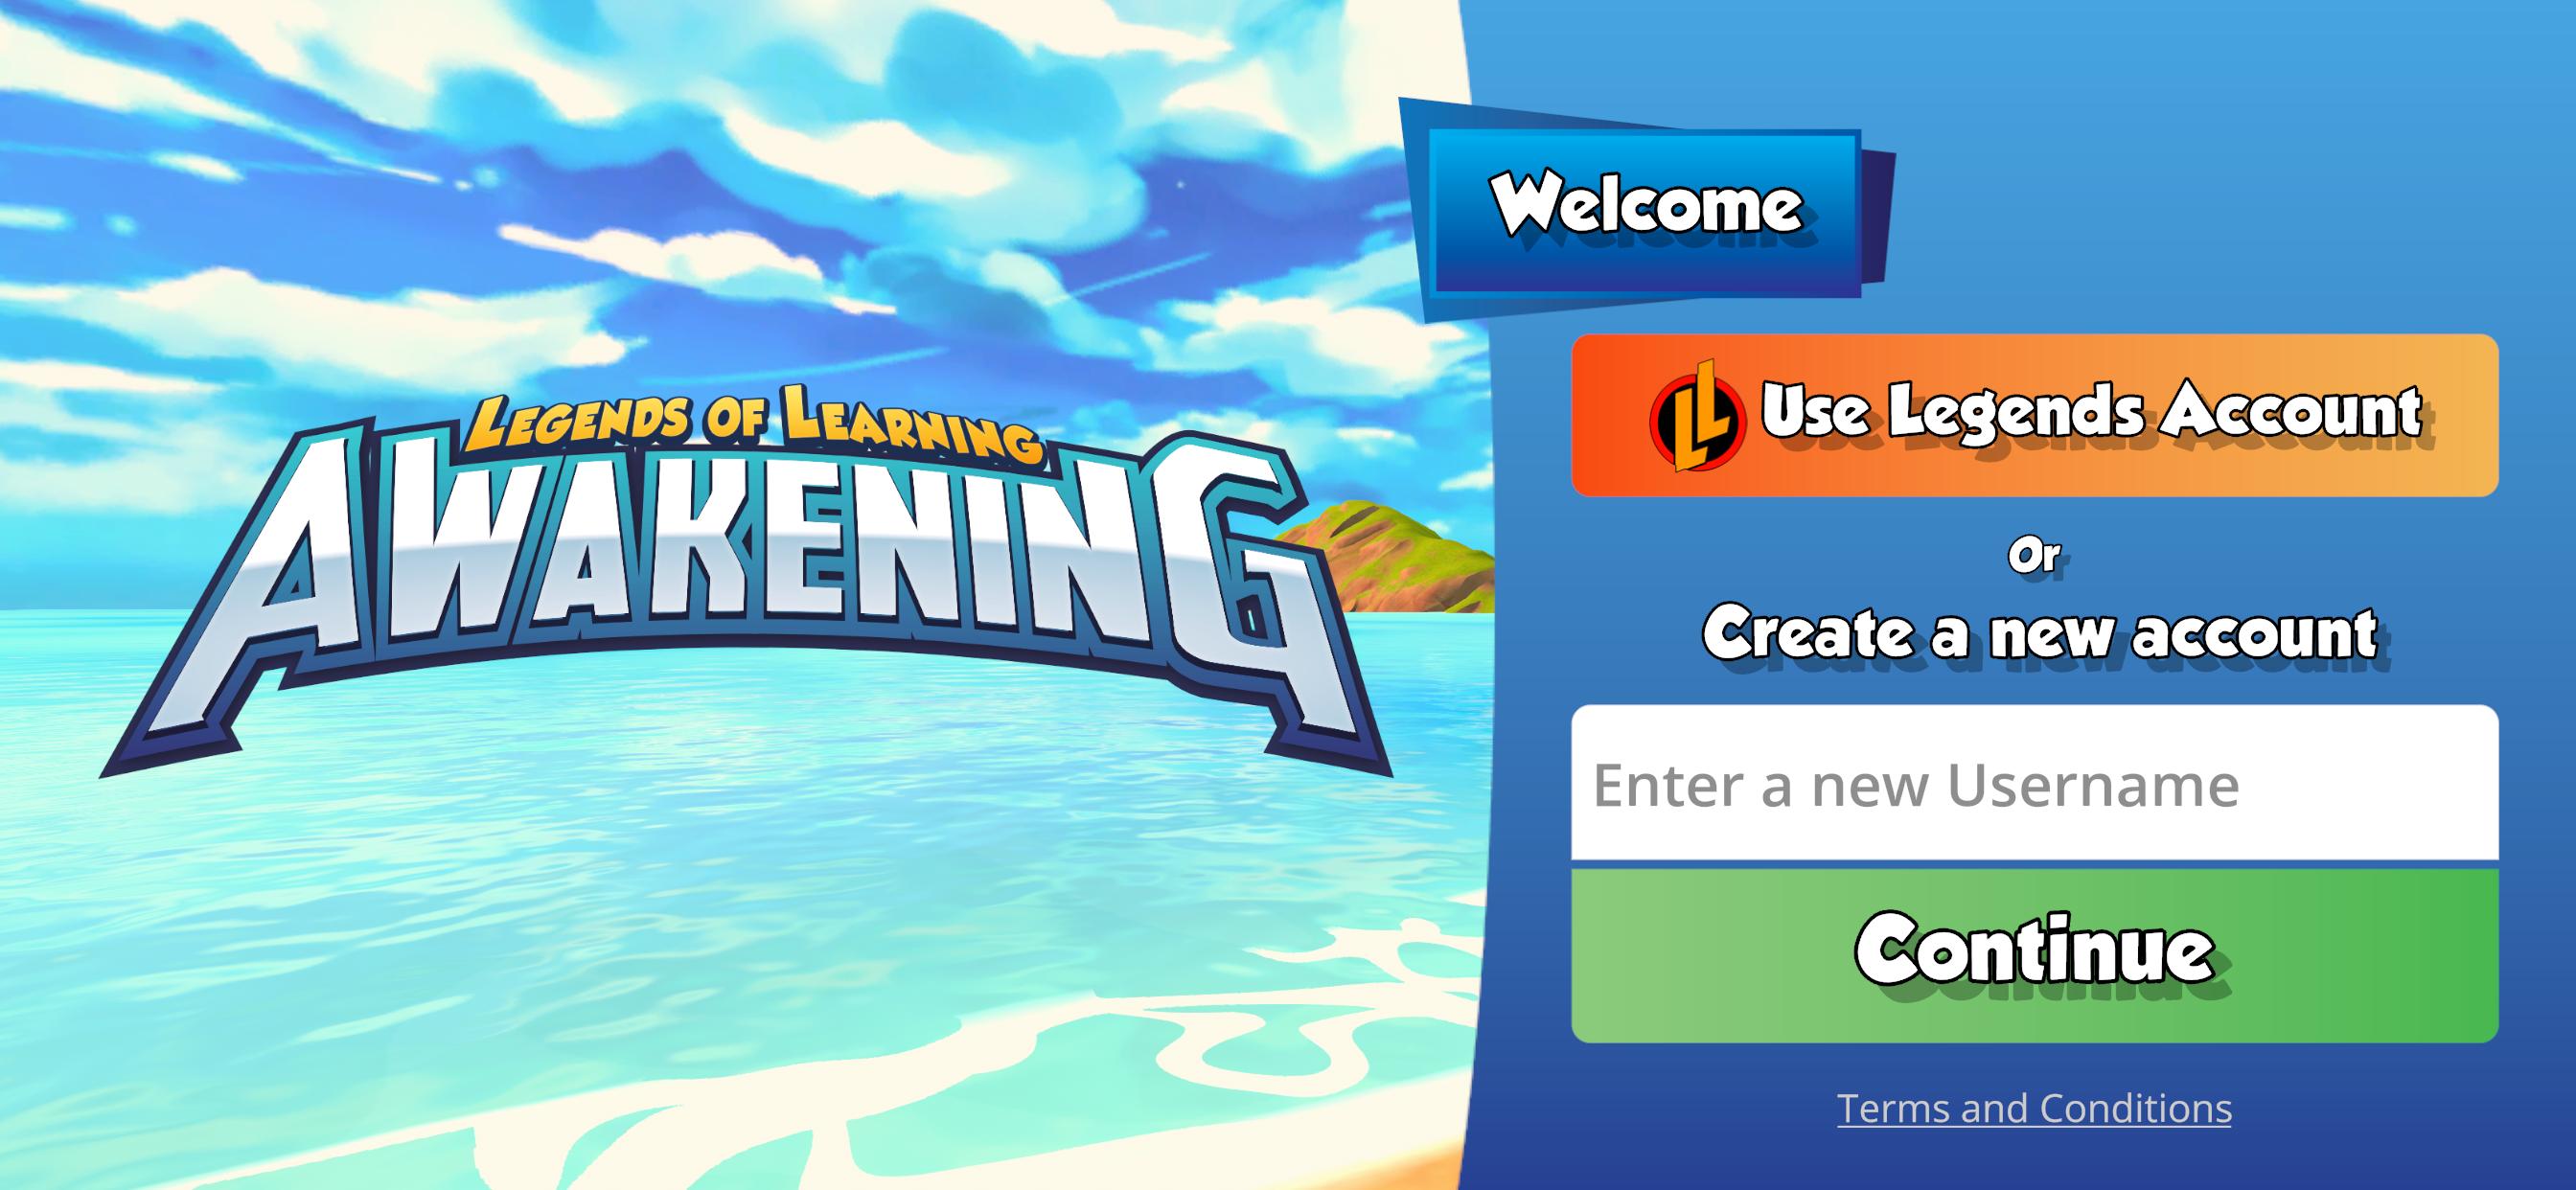 Legends of Learning Awakening 0.5.3 Screenshot 16